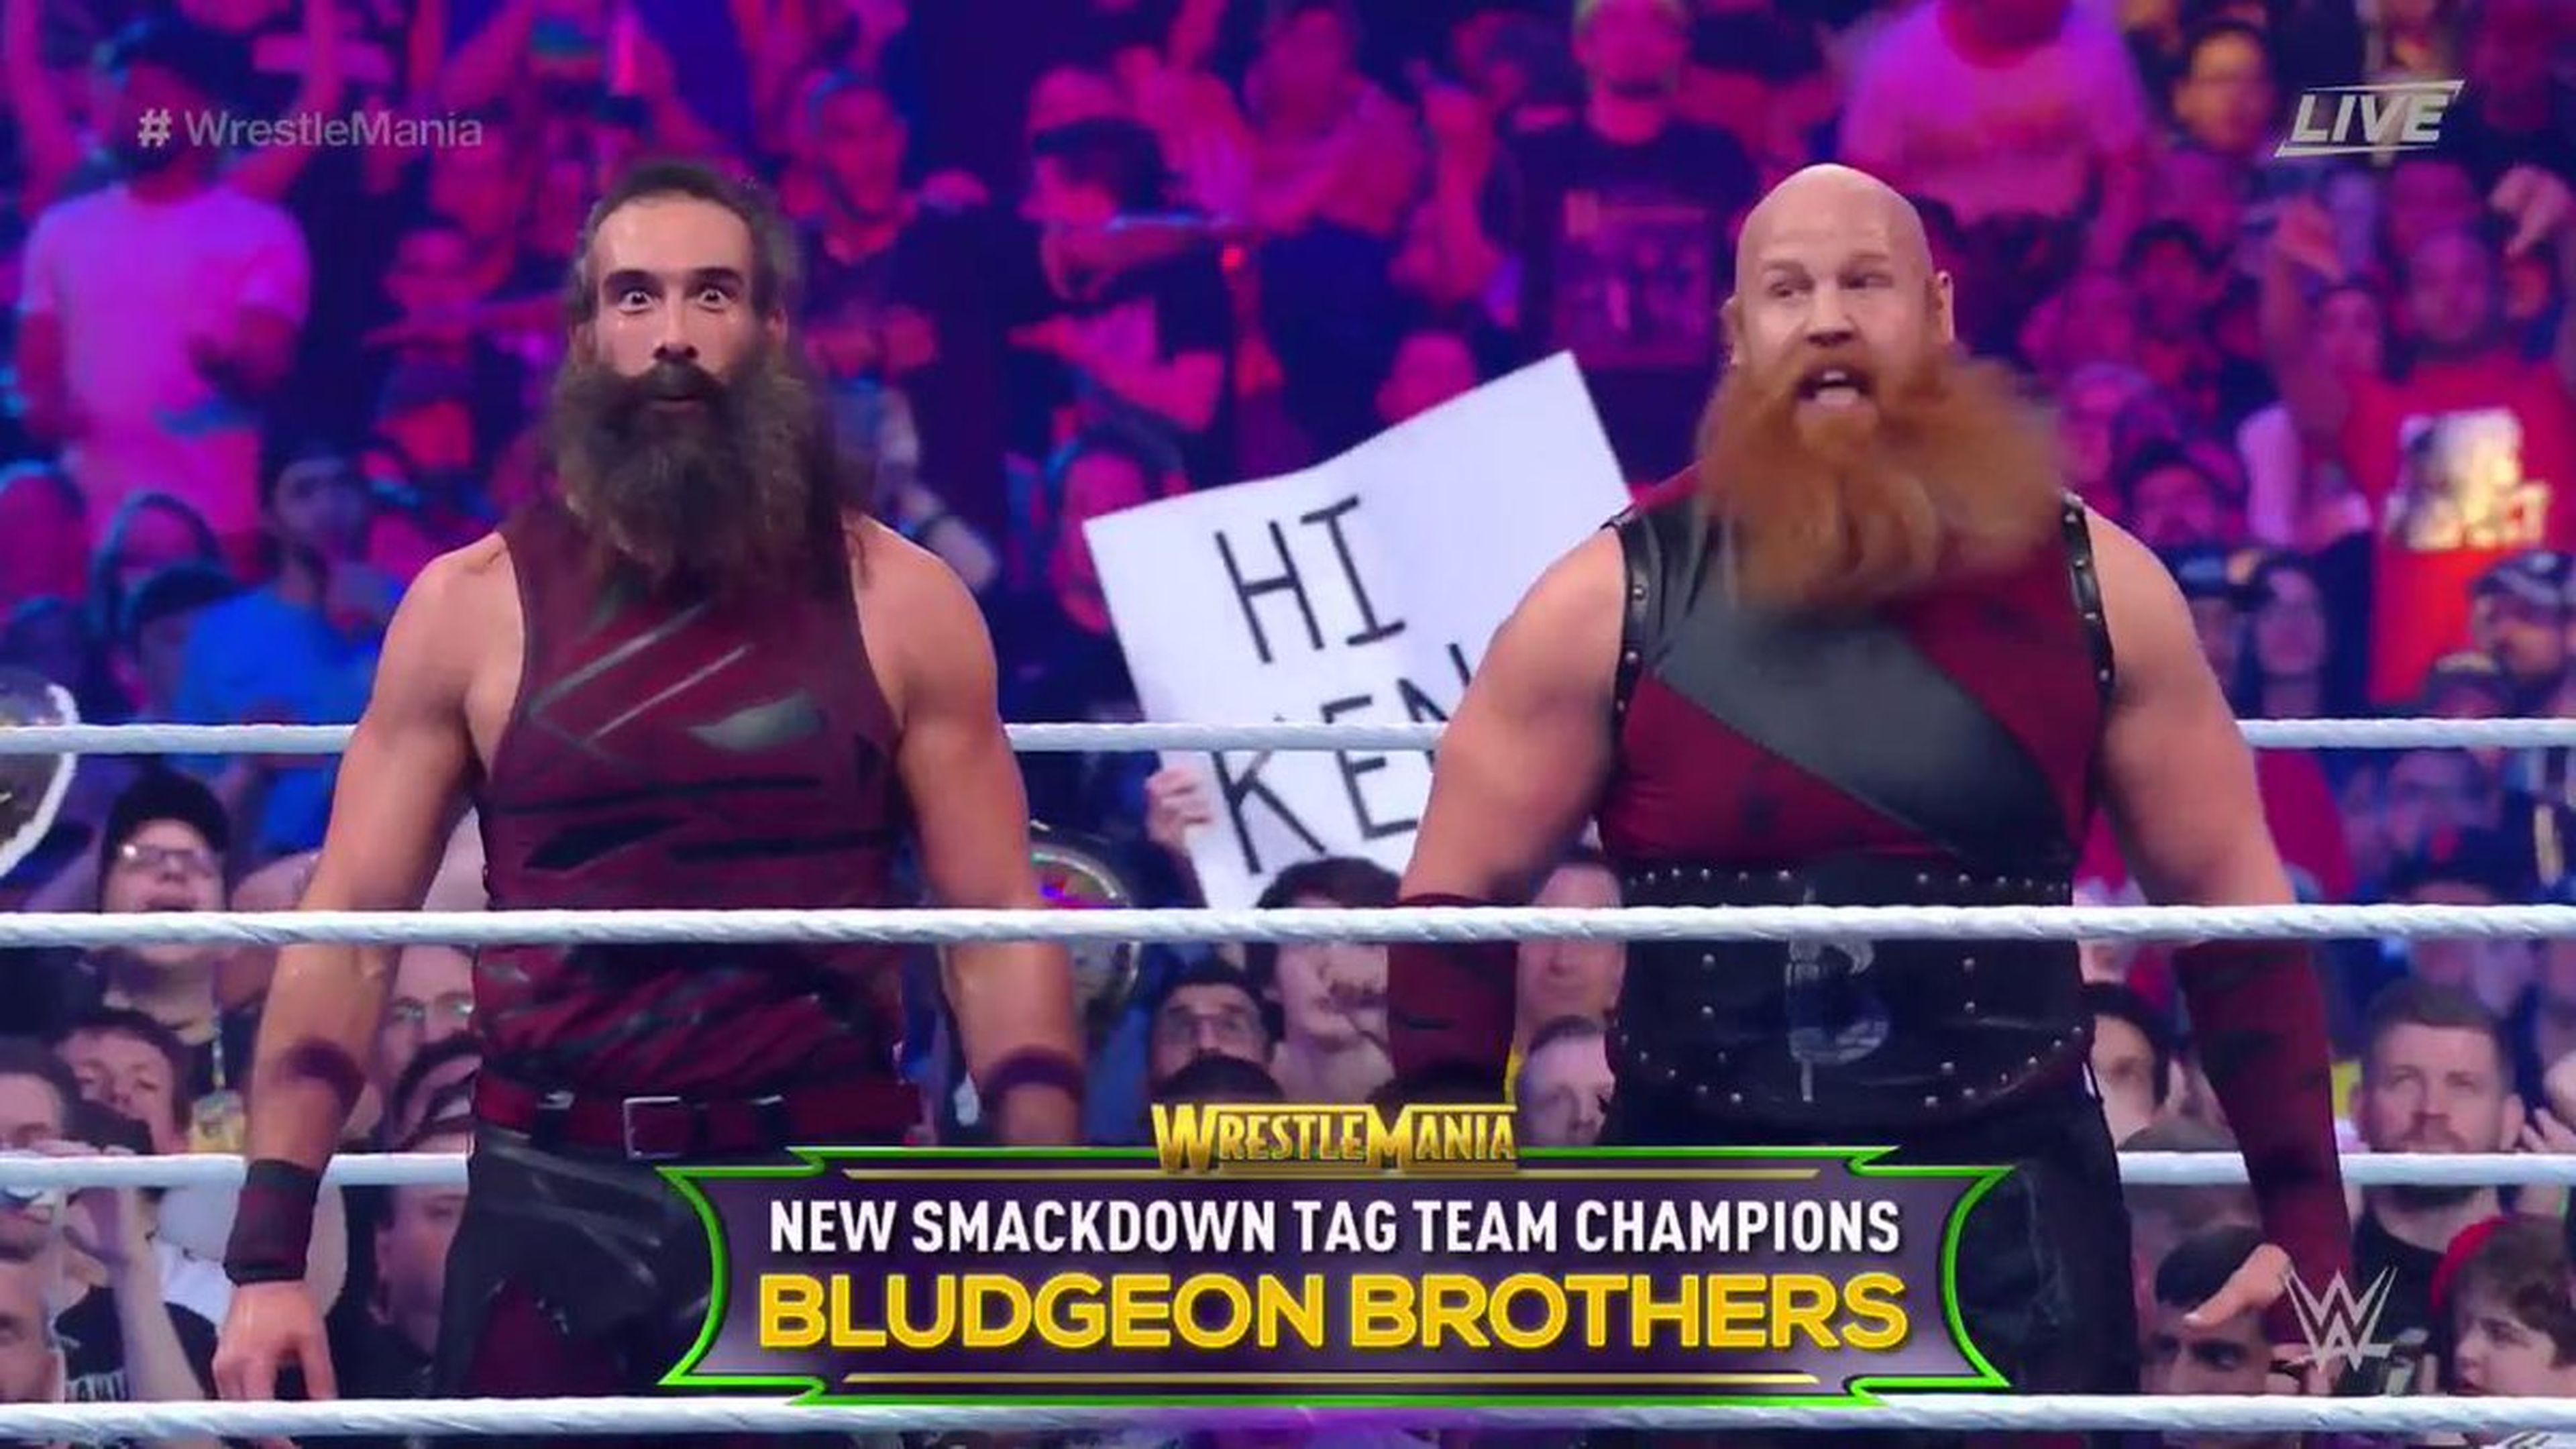 WWE WrestleMania 34 - Campeonato por Equipos de SmackDown - The Usos vs. The New Day vs. The Bludgeon Brothers